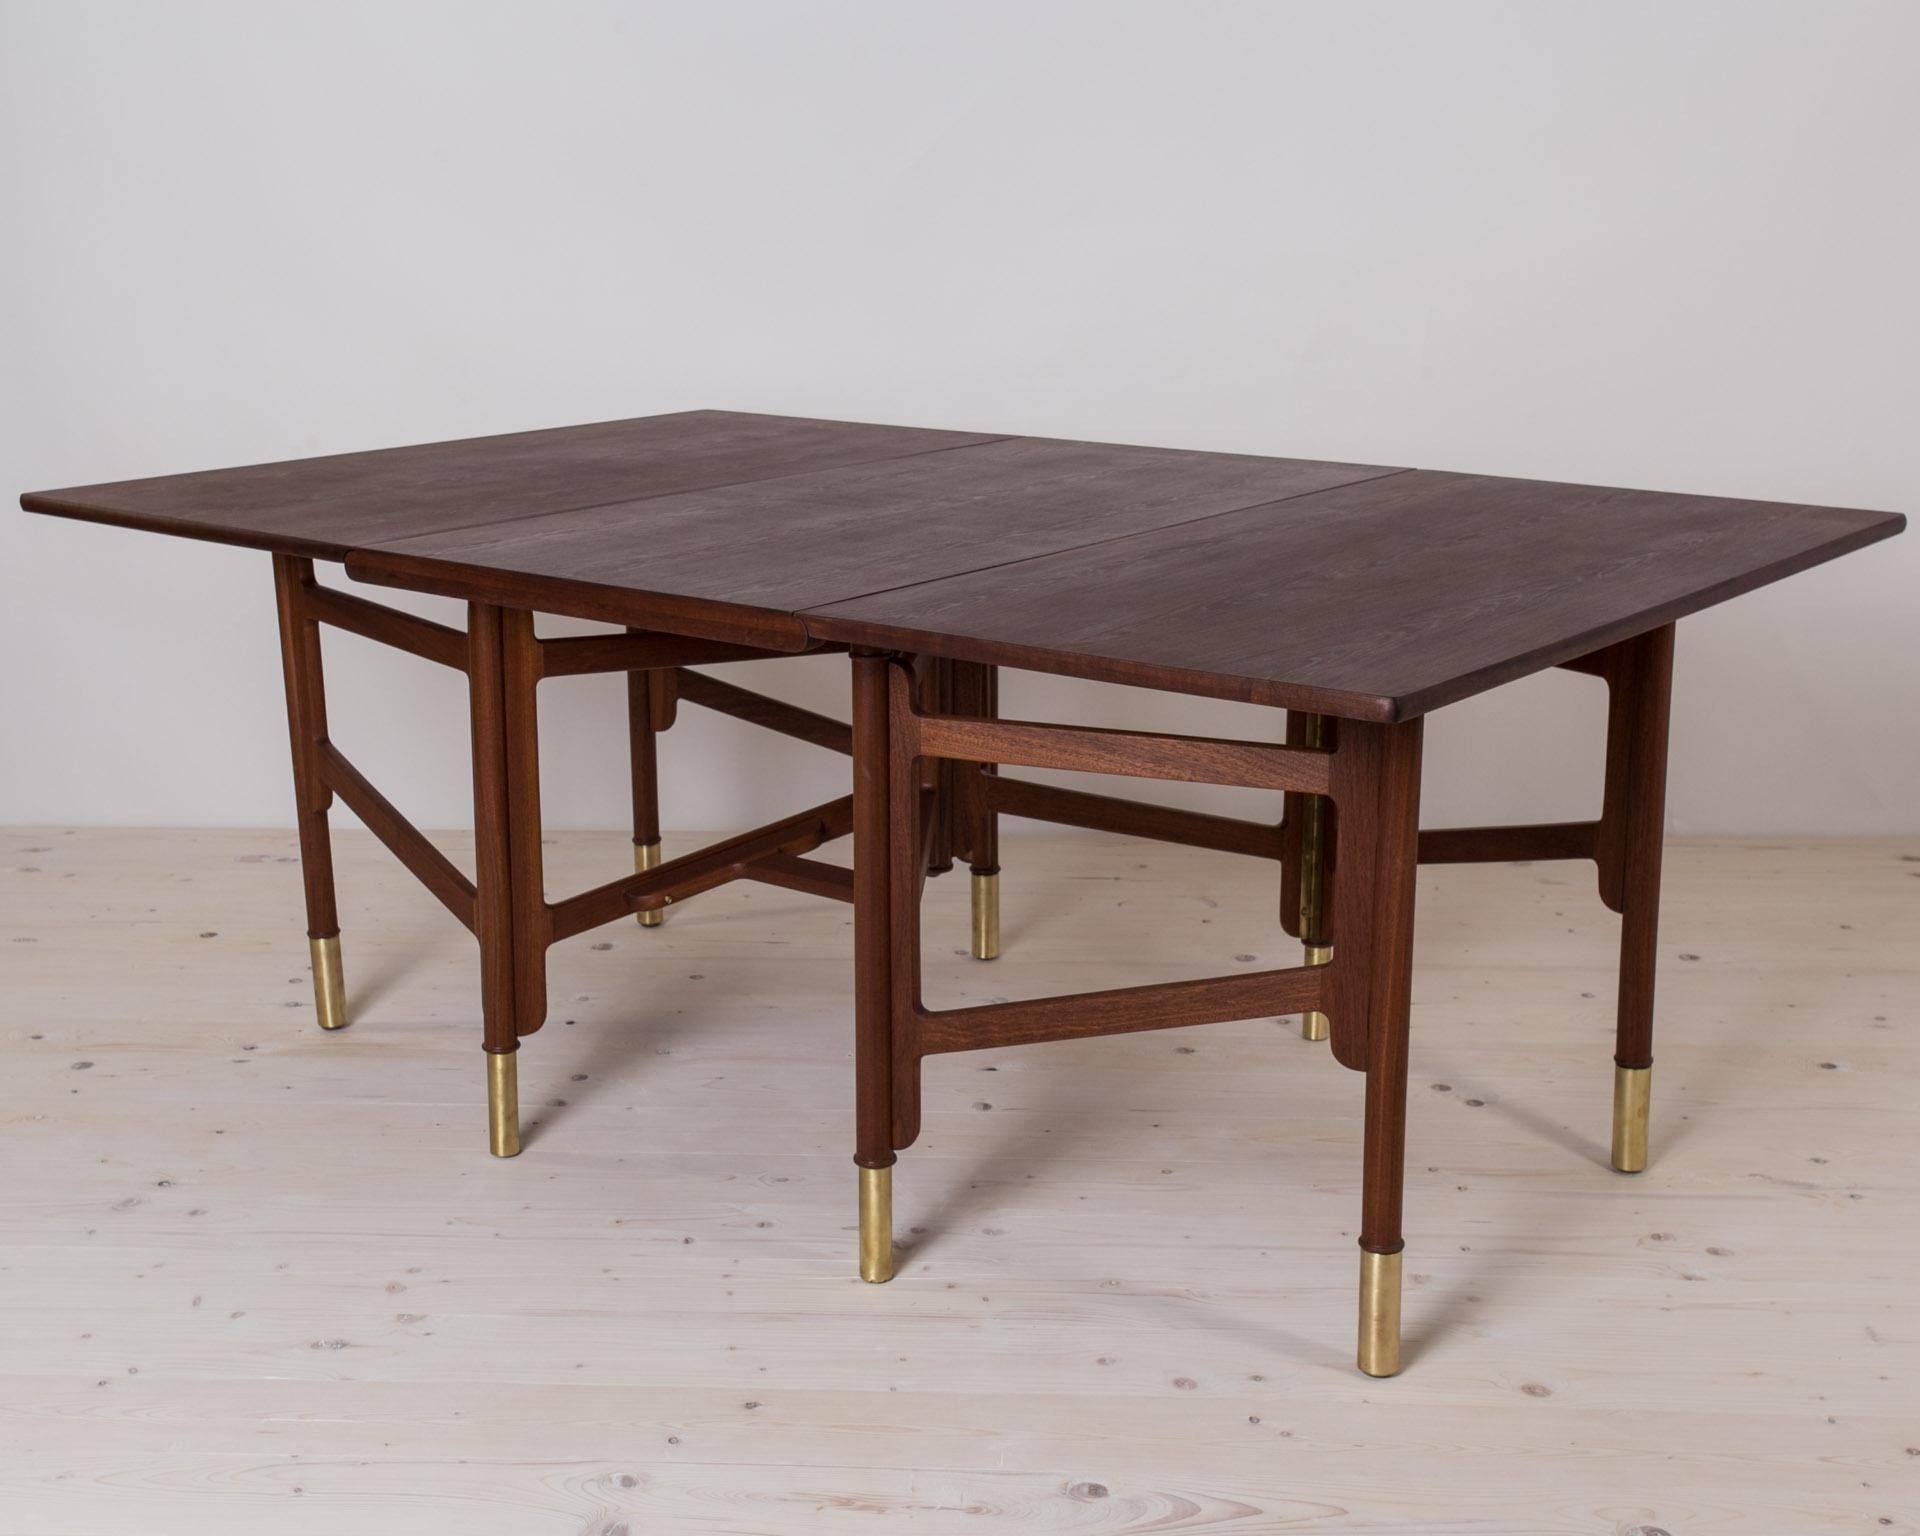 Norwegian Midcentury Dining Table, Teak Wood, Brass Elements, Norway, 1950s For Sale